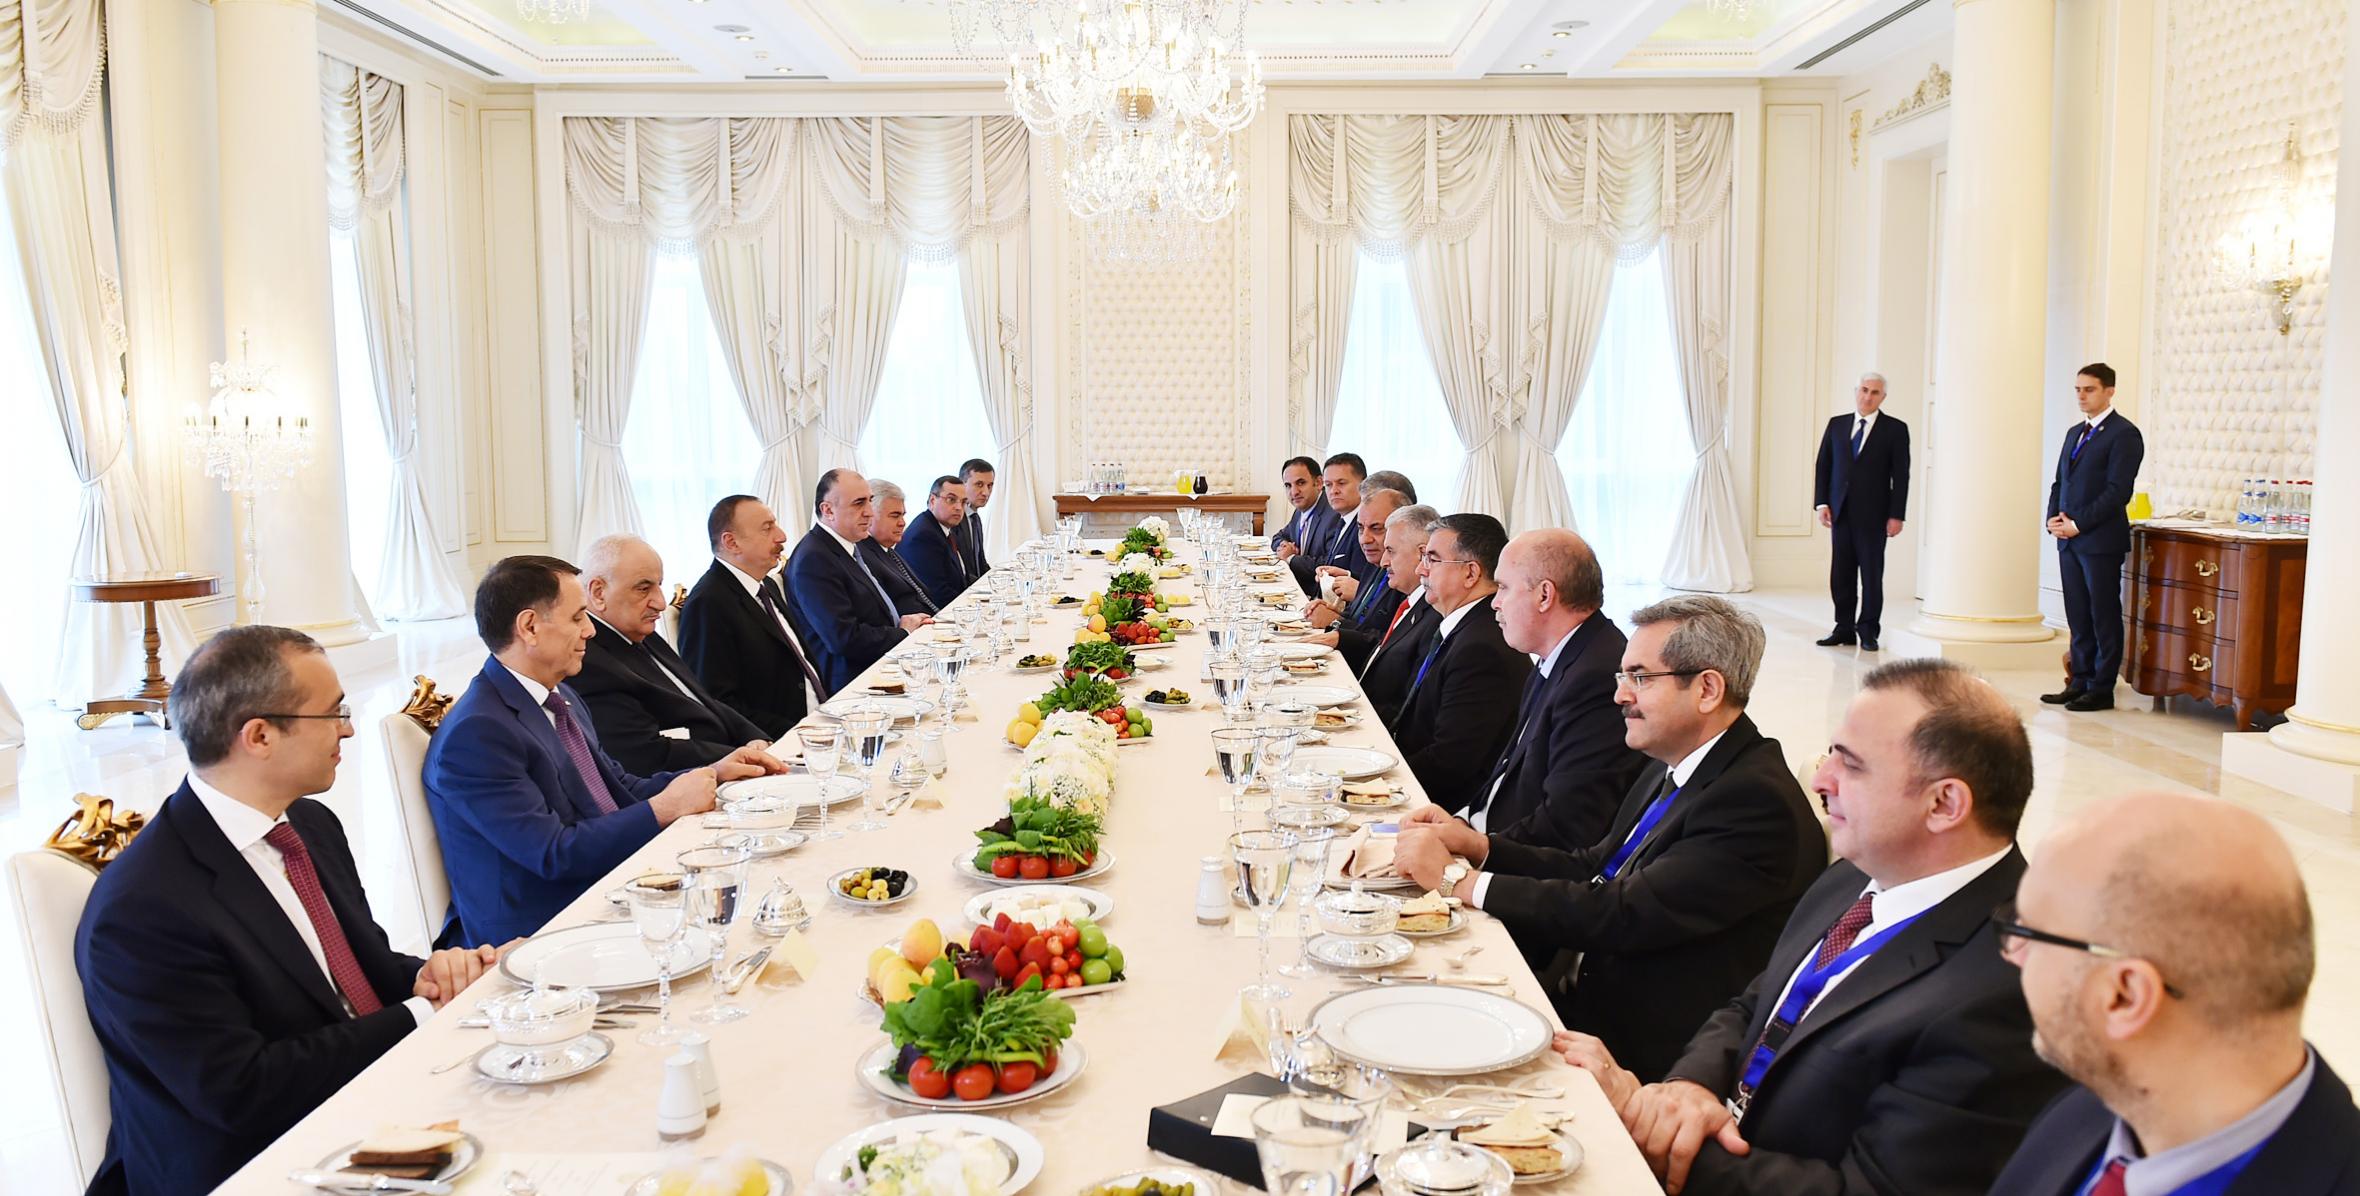 Dinner reception hosted on behalf of Ilham Aliyev in honor of Turkish Premier